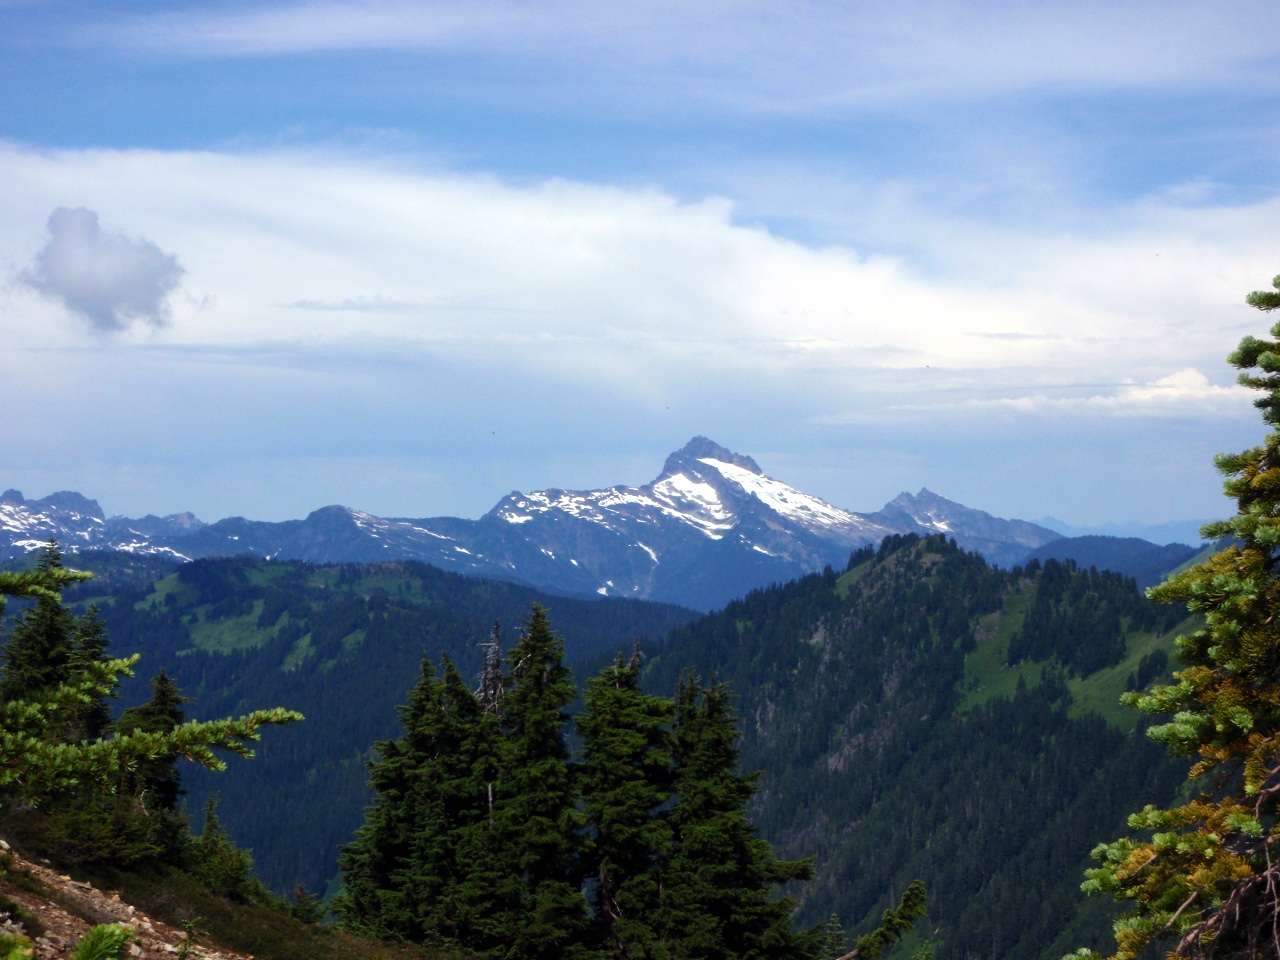 First view of Sloan Peak